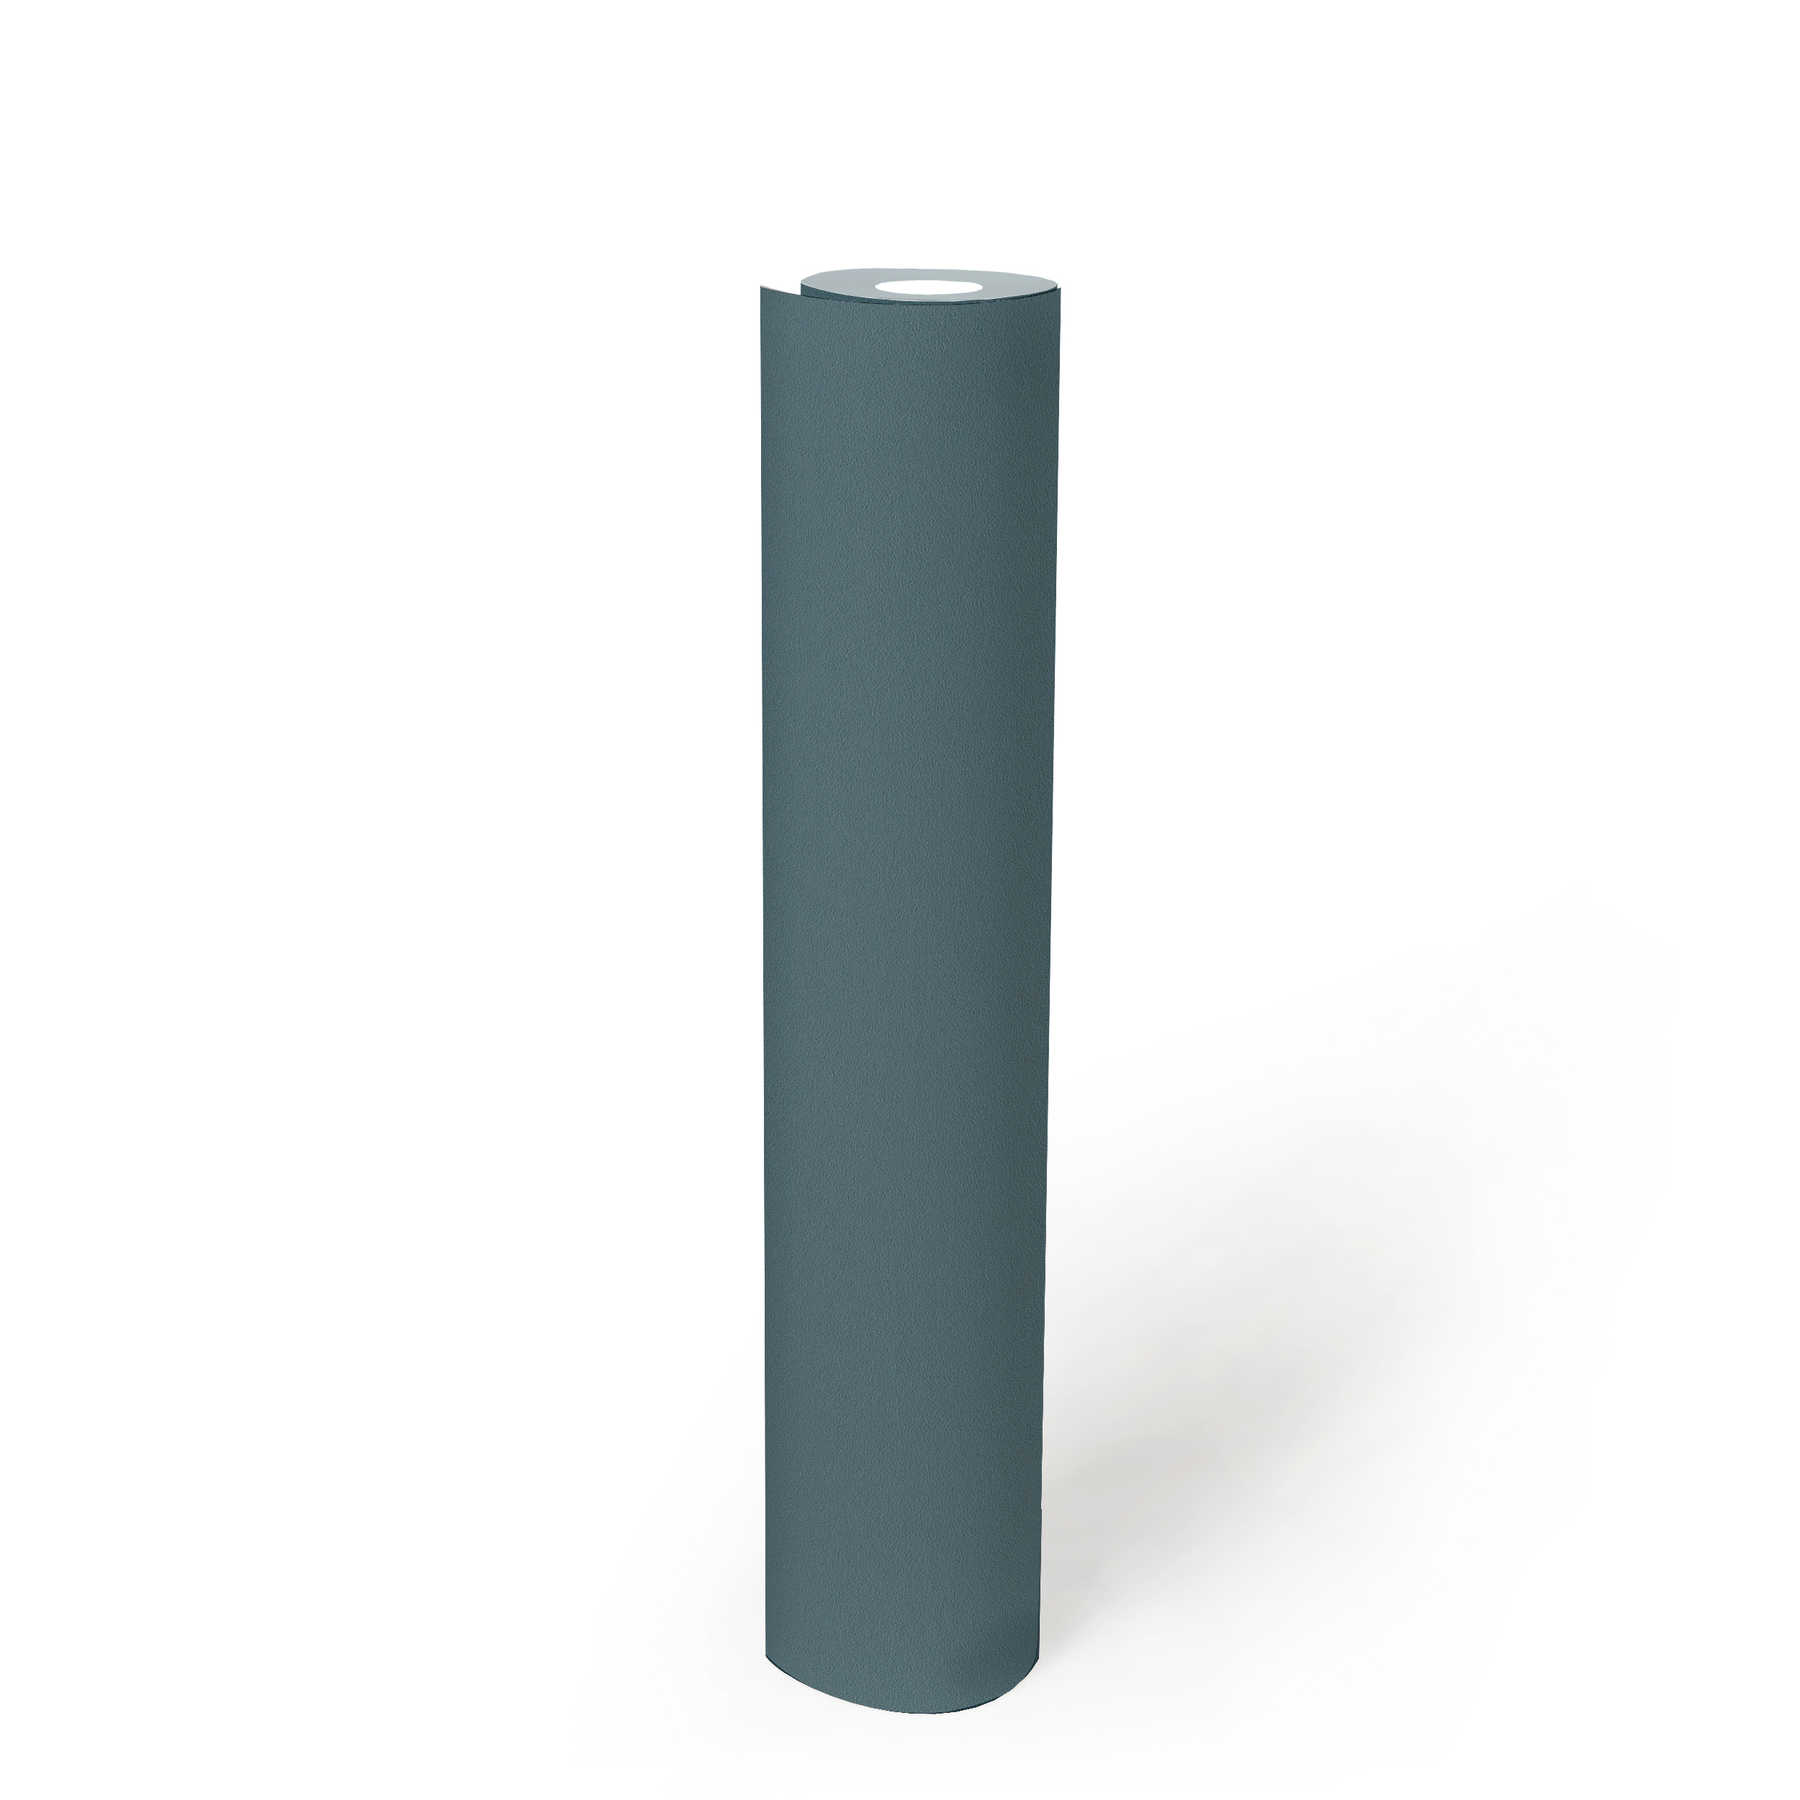             Non-woven wallpaper petrol blue plain, matt with smooth structure
        